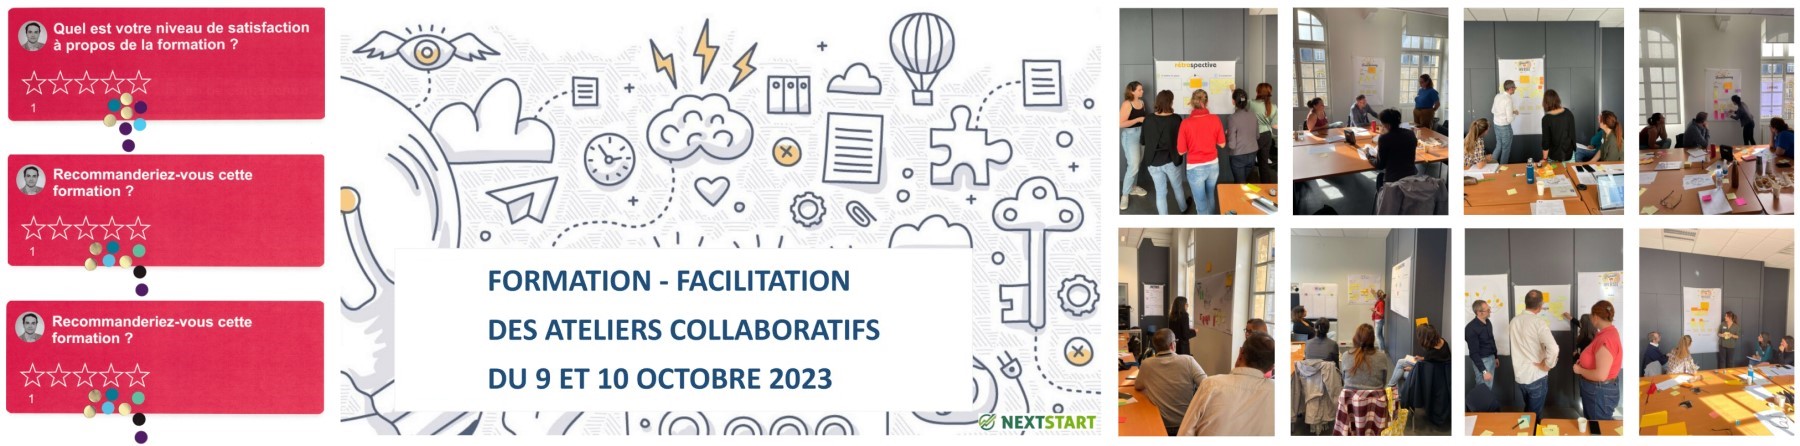 Facilitate collaborative meetings